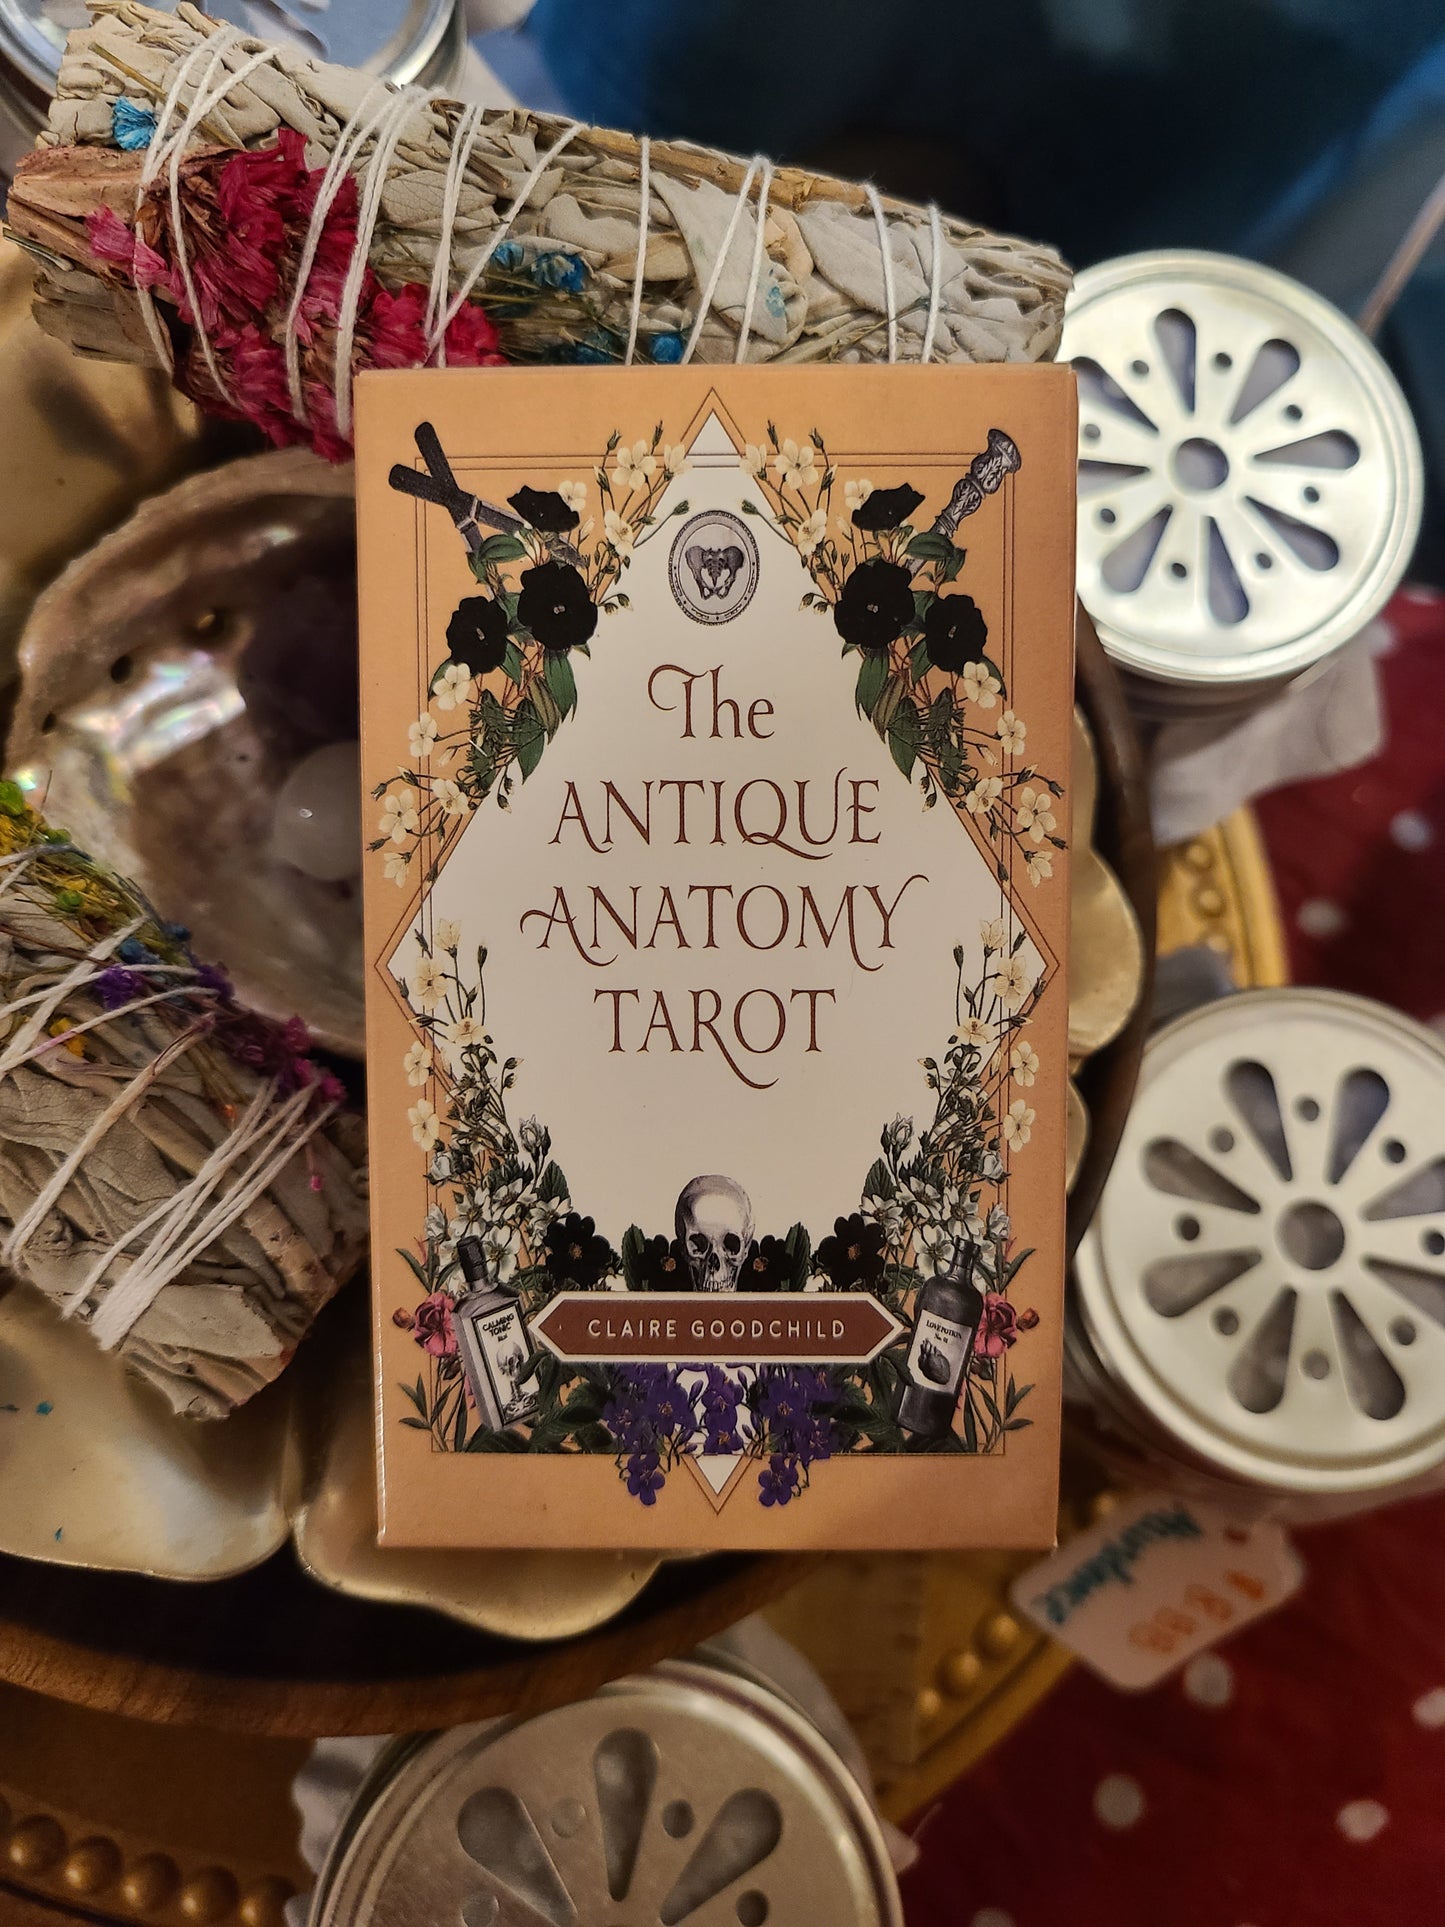 The Antique Anatomy Tarot